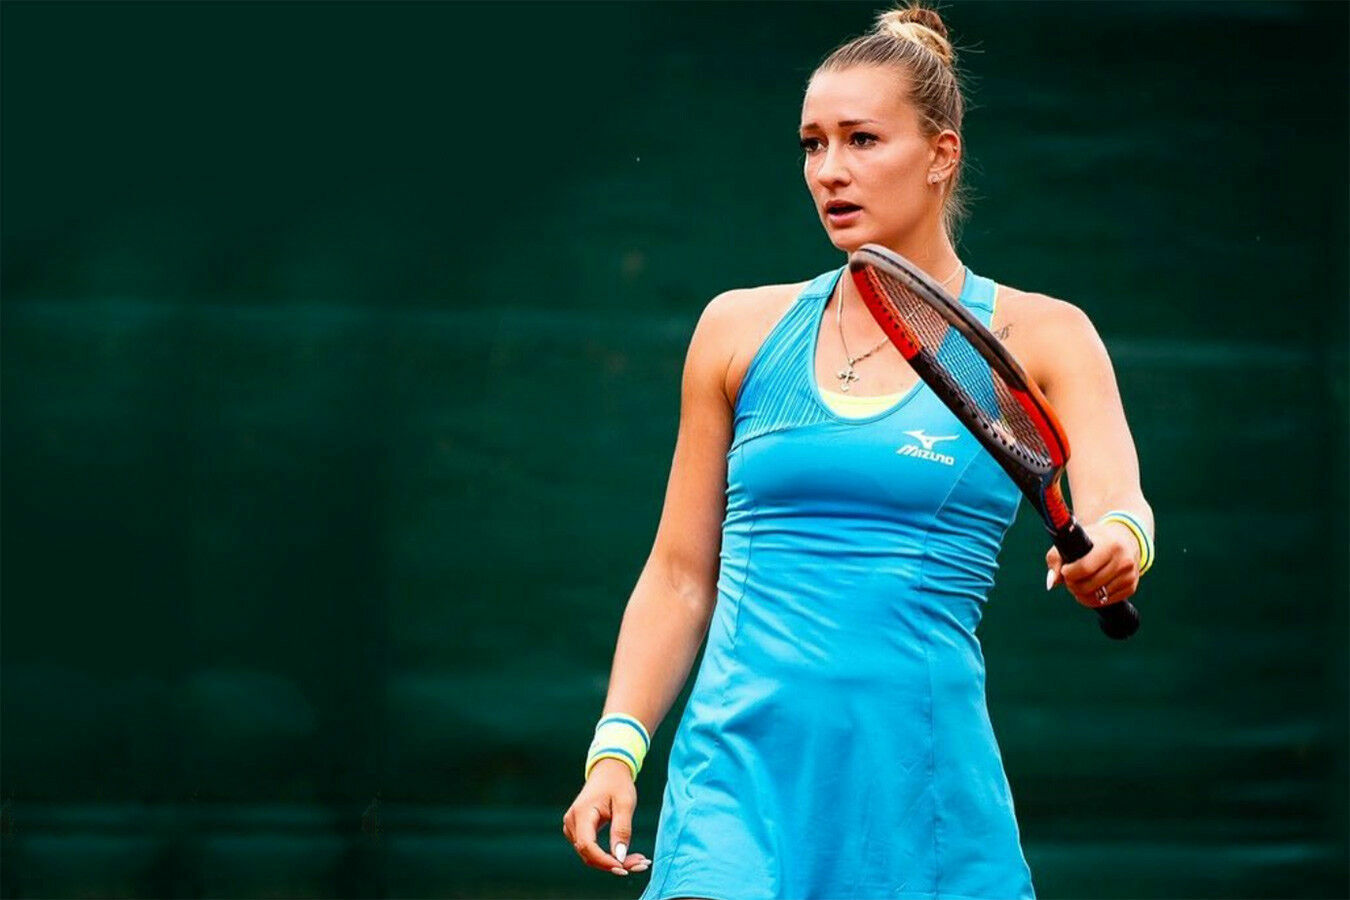 Теннисистка Яна Сизикова пожаловалась на клевету о договорном матче